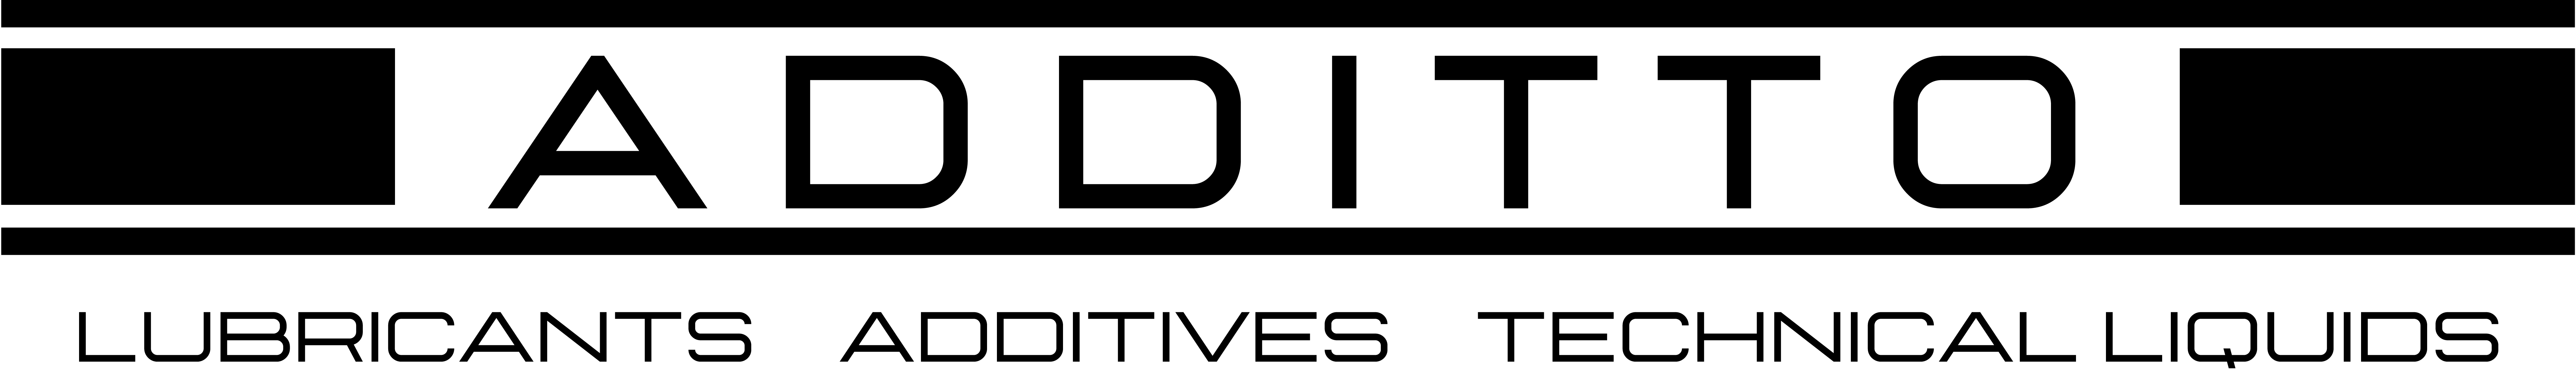 logo-additto-zwart-transparant.png